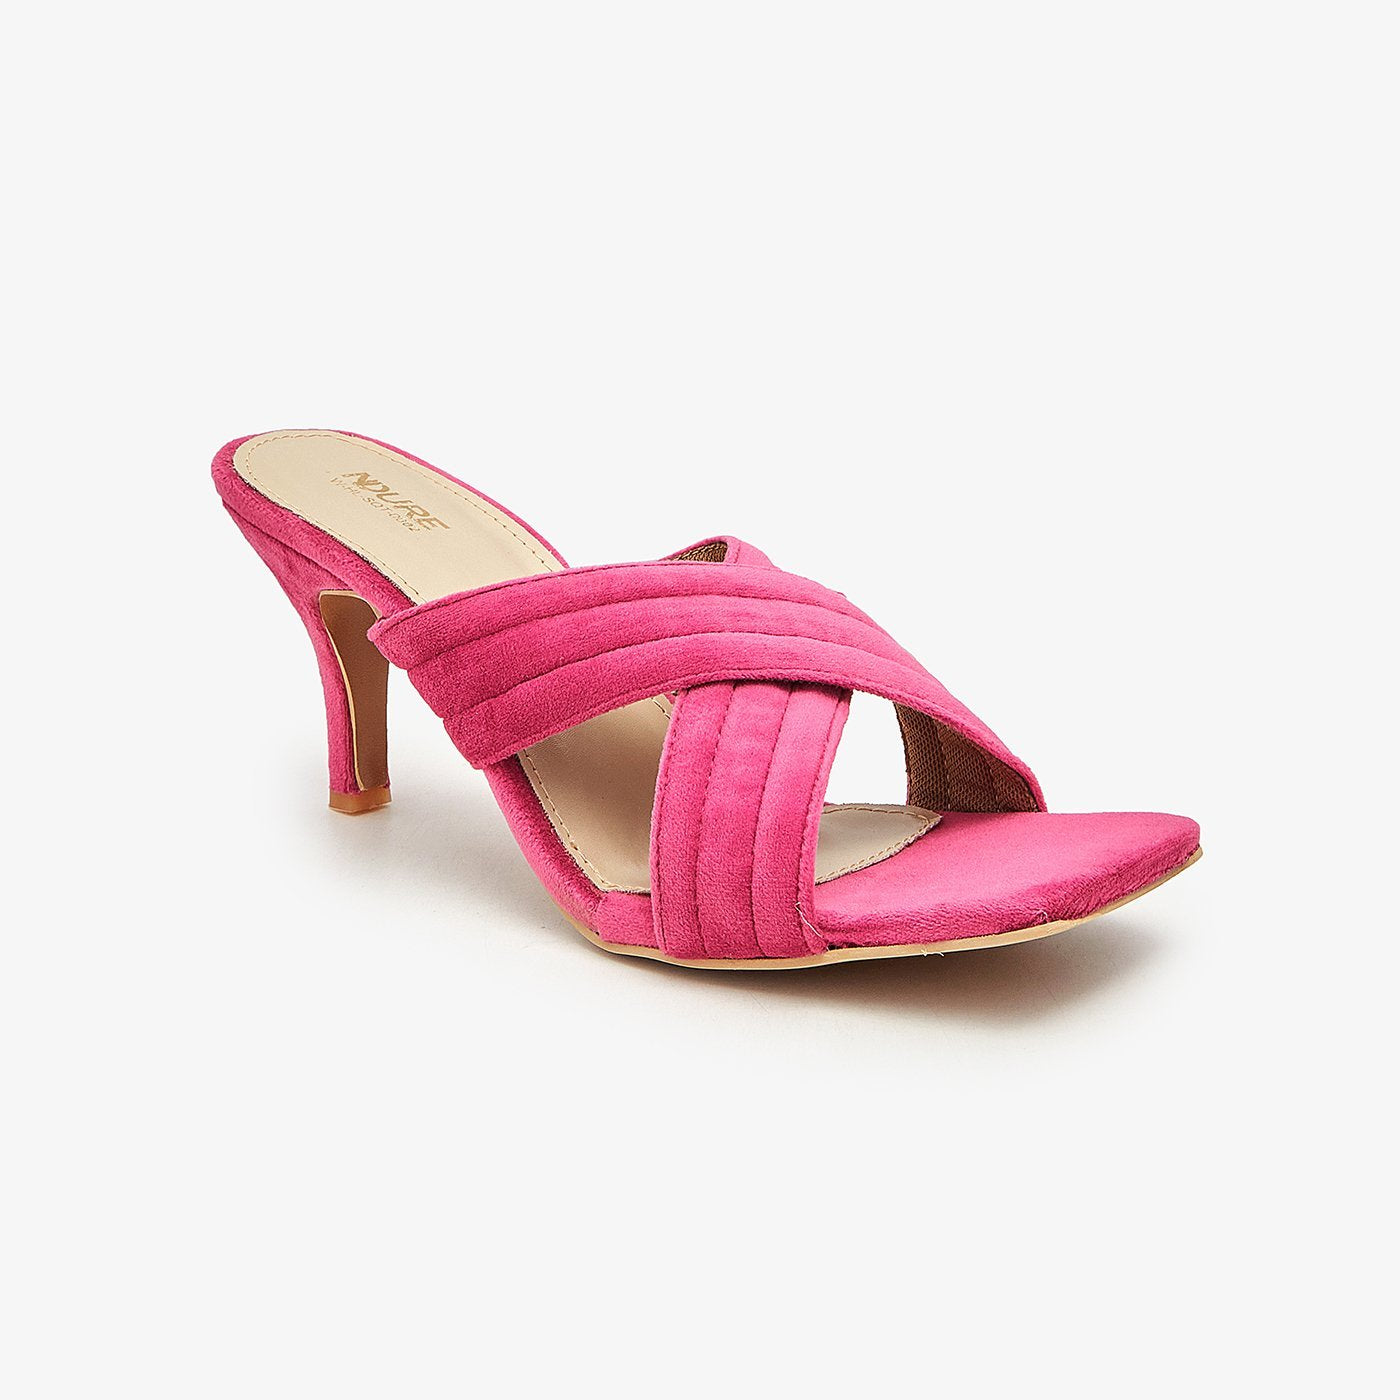 Wedding shoes blush pink, Velvet Block Heels Sandals - Veletta